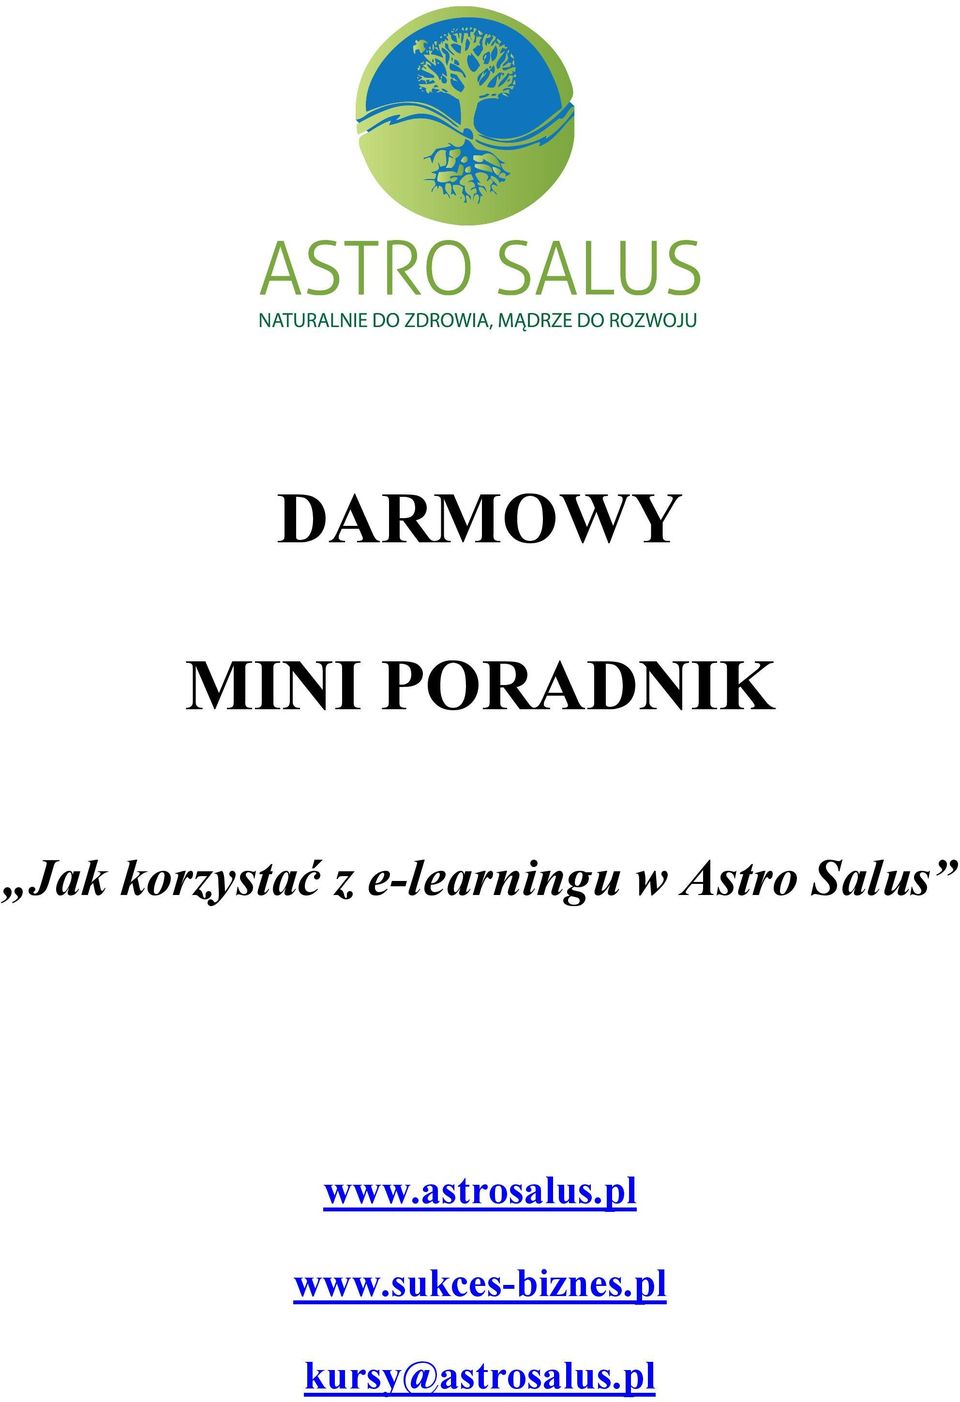 Astro Salus www.astrosalus.